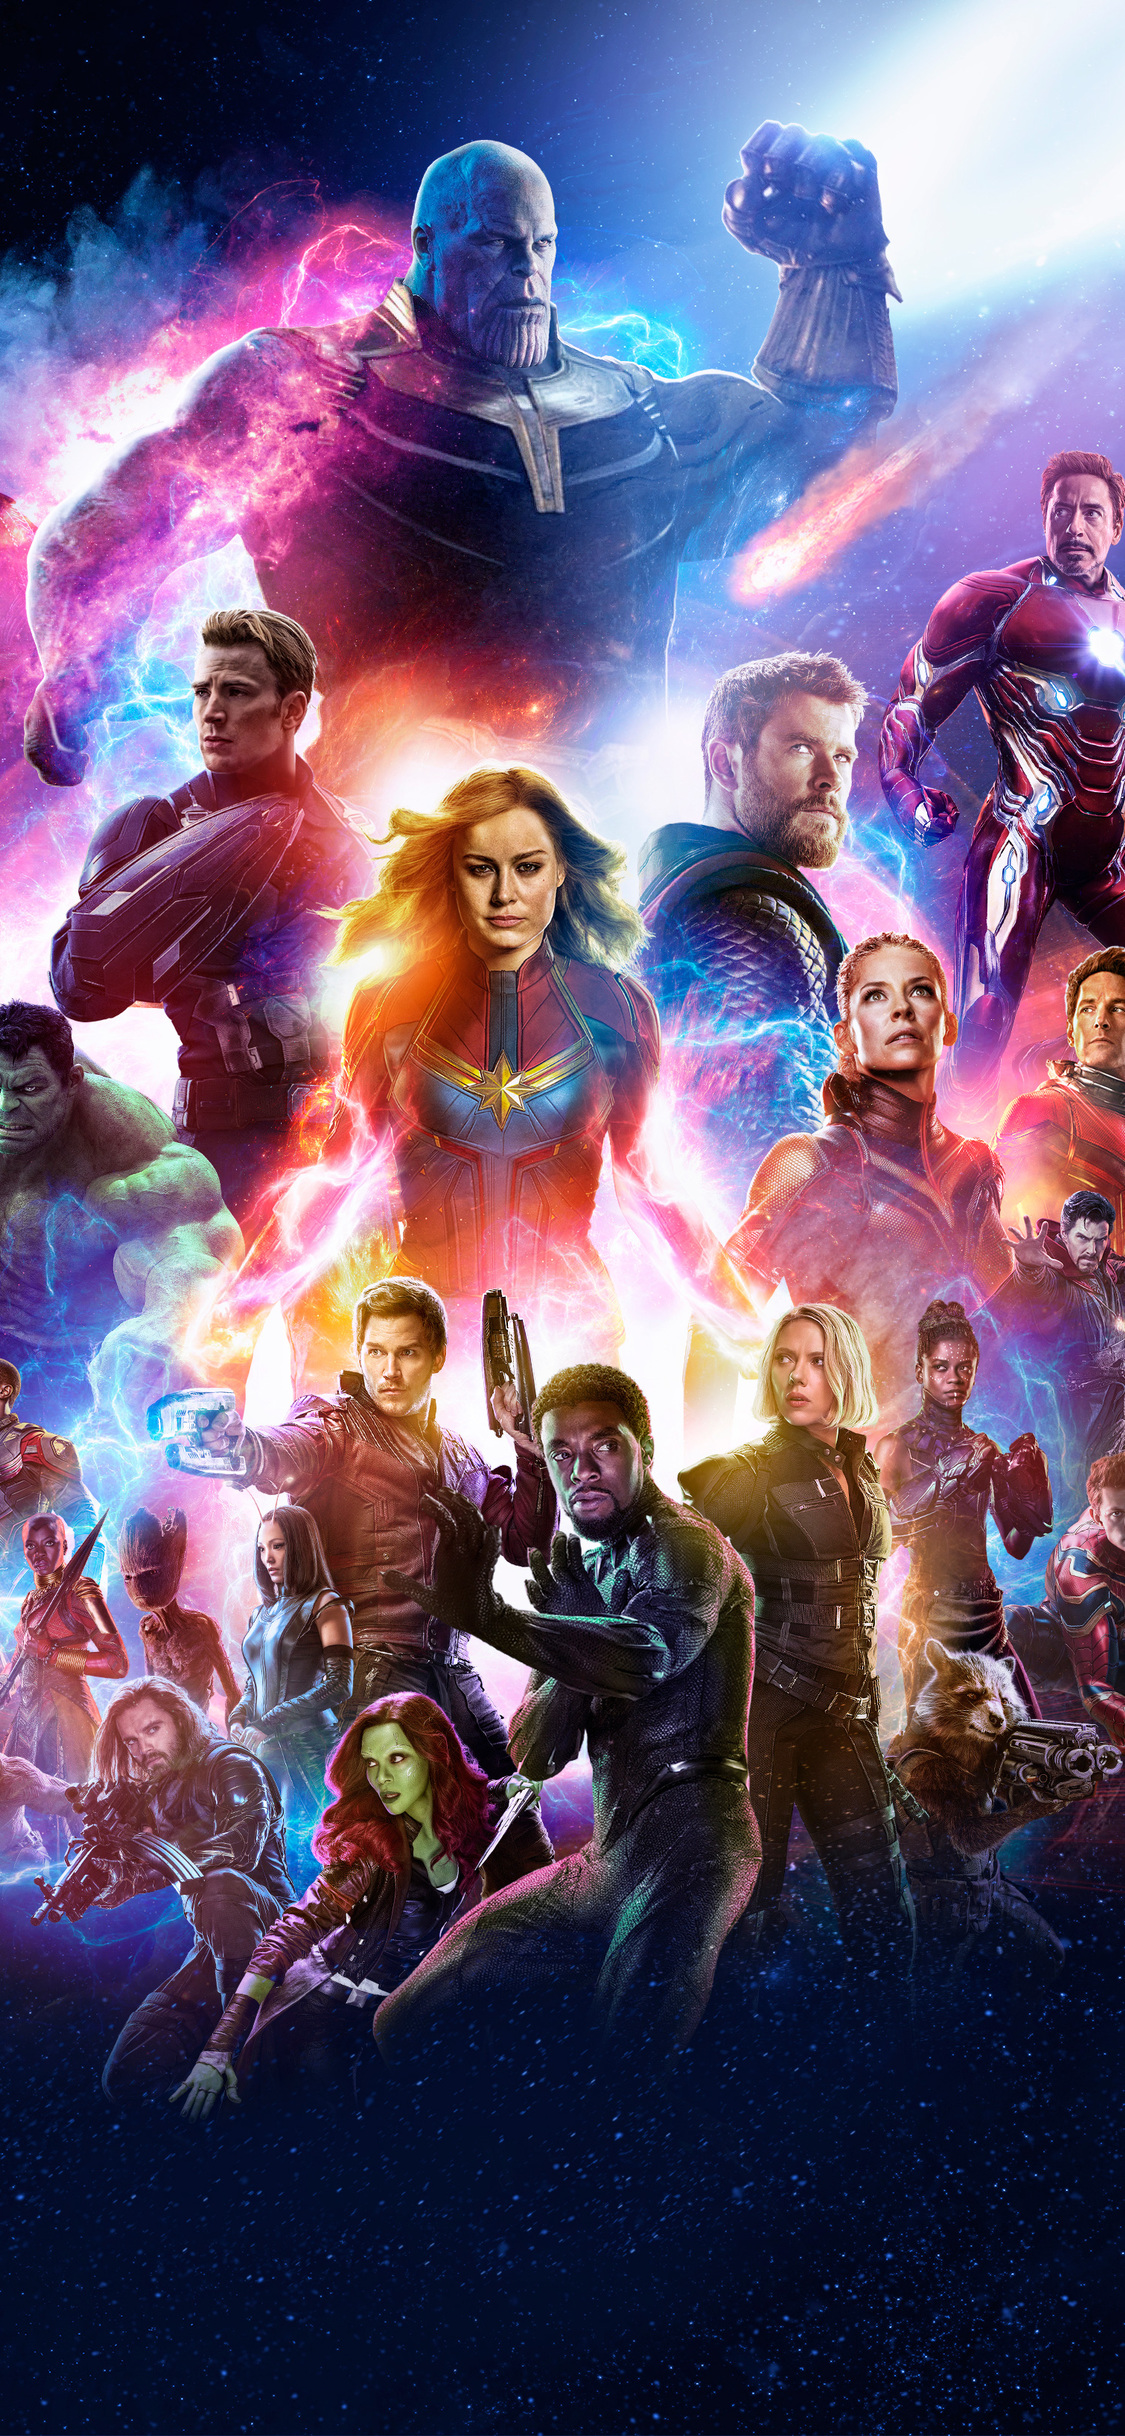 Avengers 4 Movie 2019 iPhone XS, iPhone iPhone X